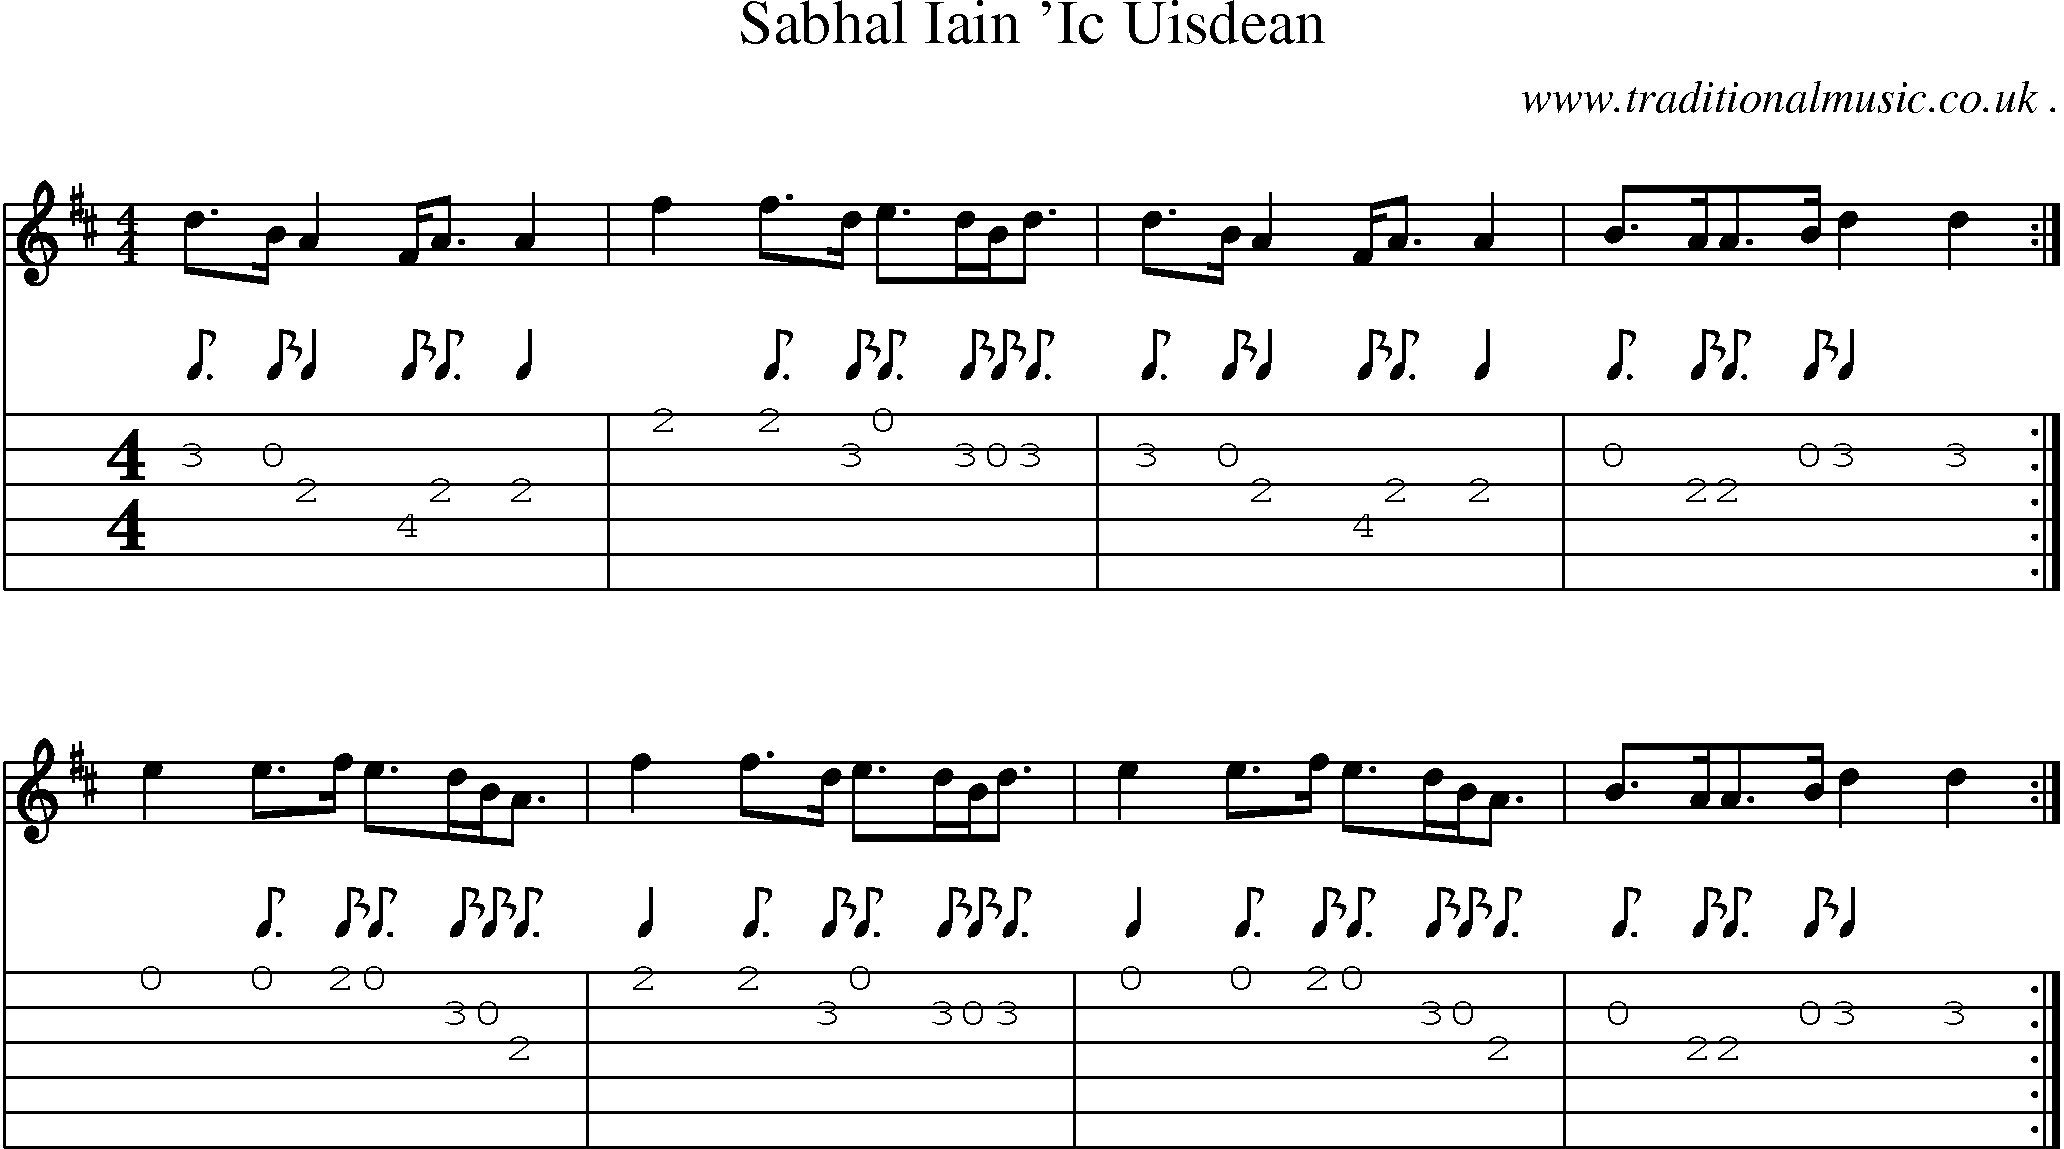 Sheet-music  score, Chords and Guitar Tabs for Sabhal Iain Ic Uisdean